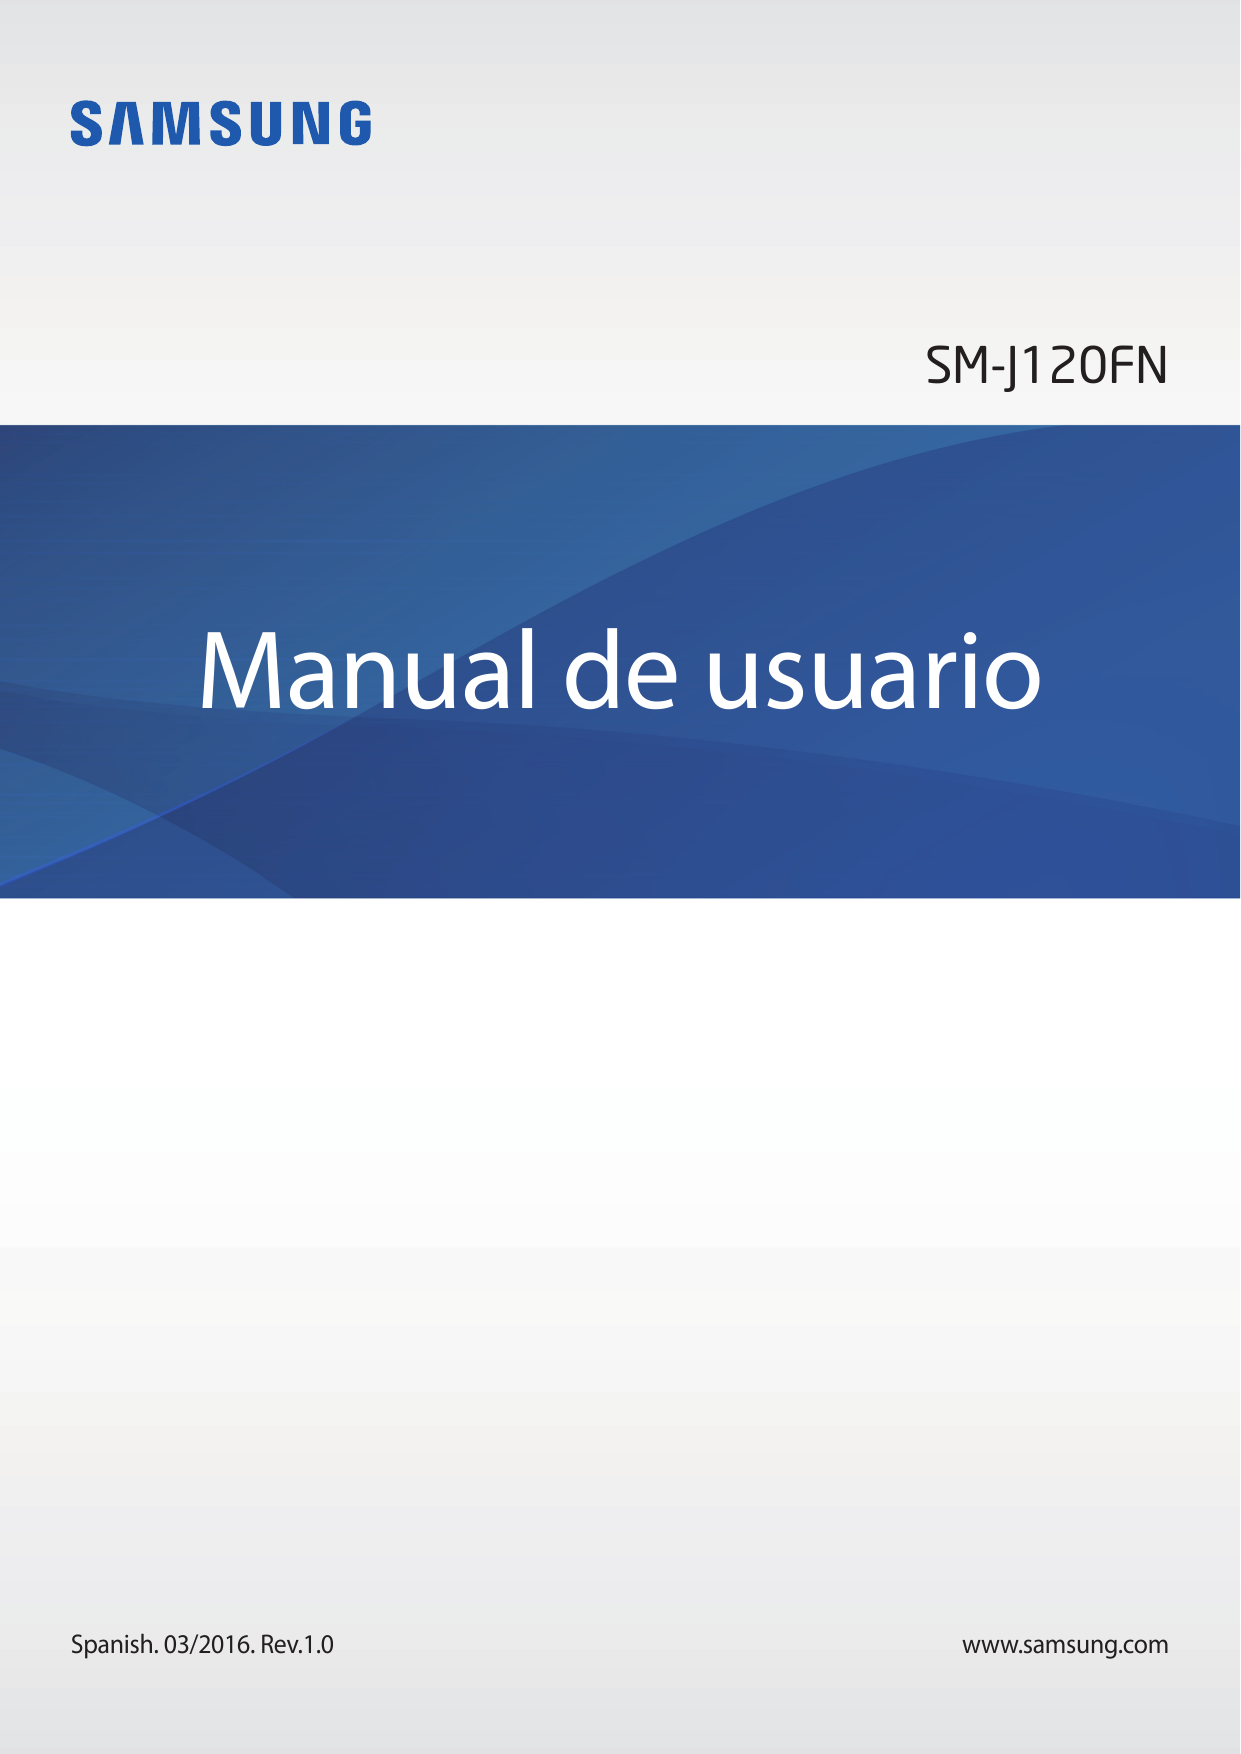 SM-J120FNManual de usuarioSpanish. 03/2016. Rev.1.0www.samsung.com